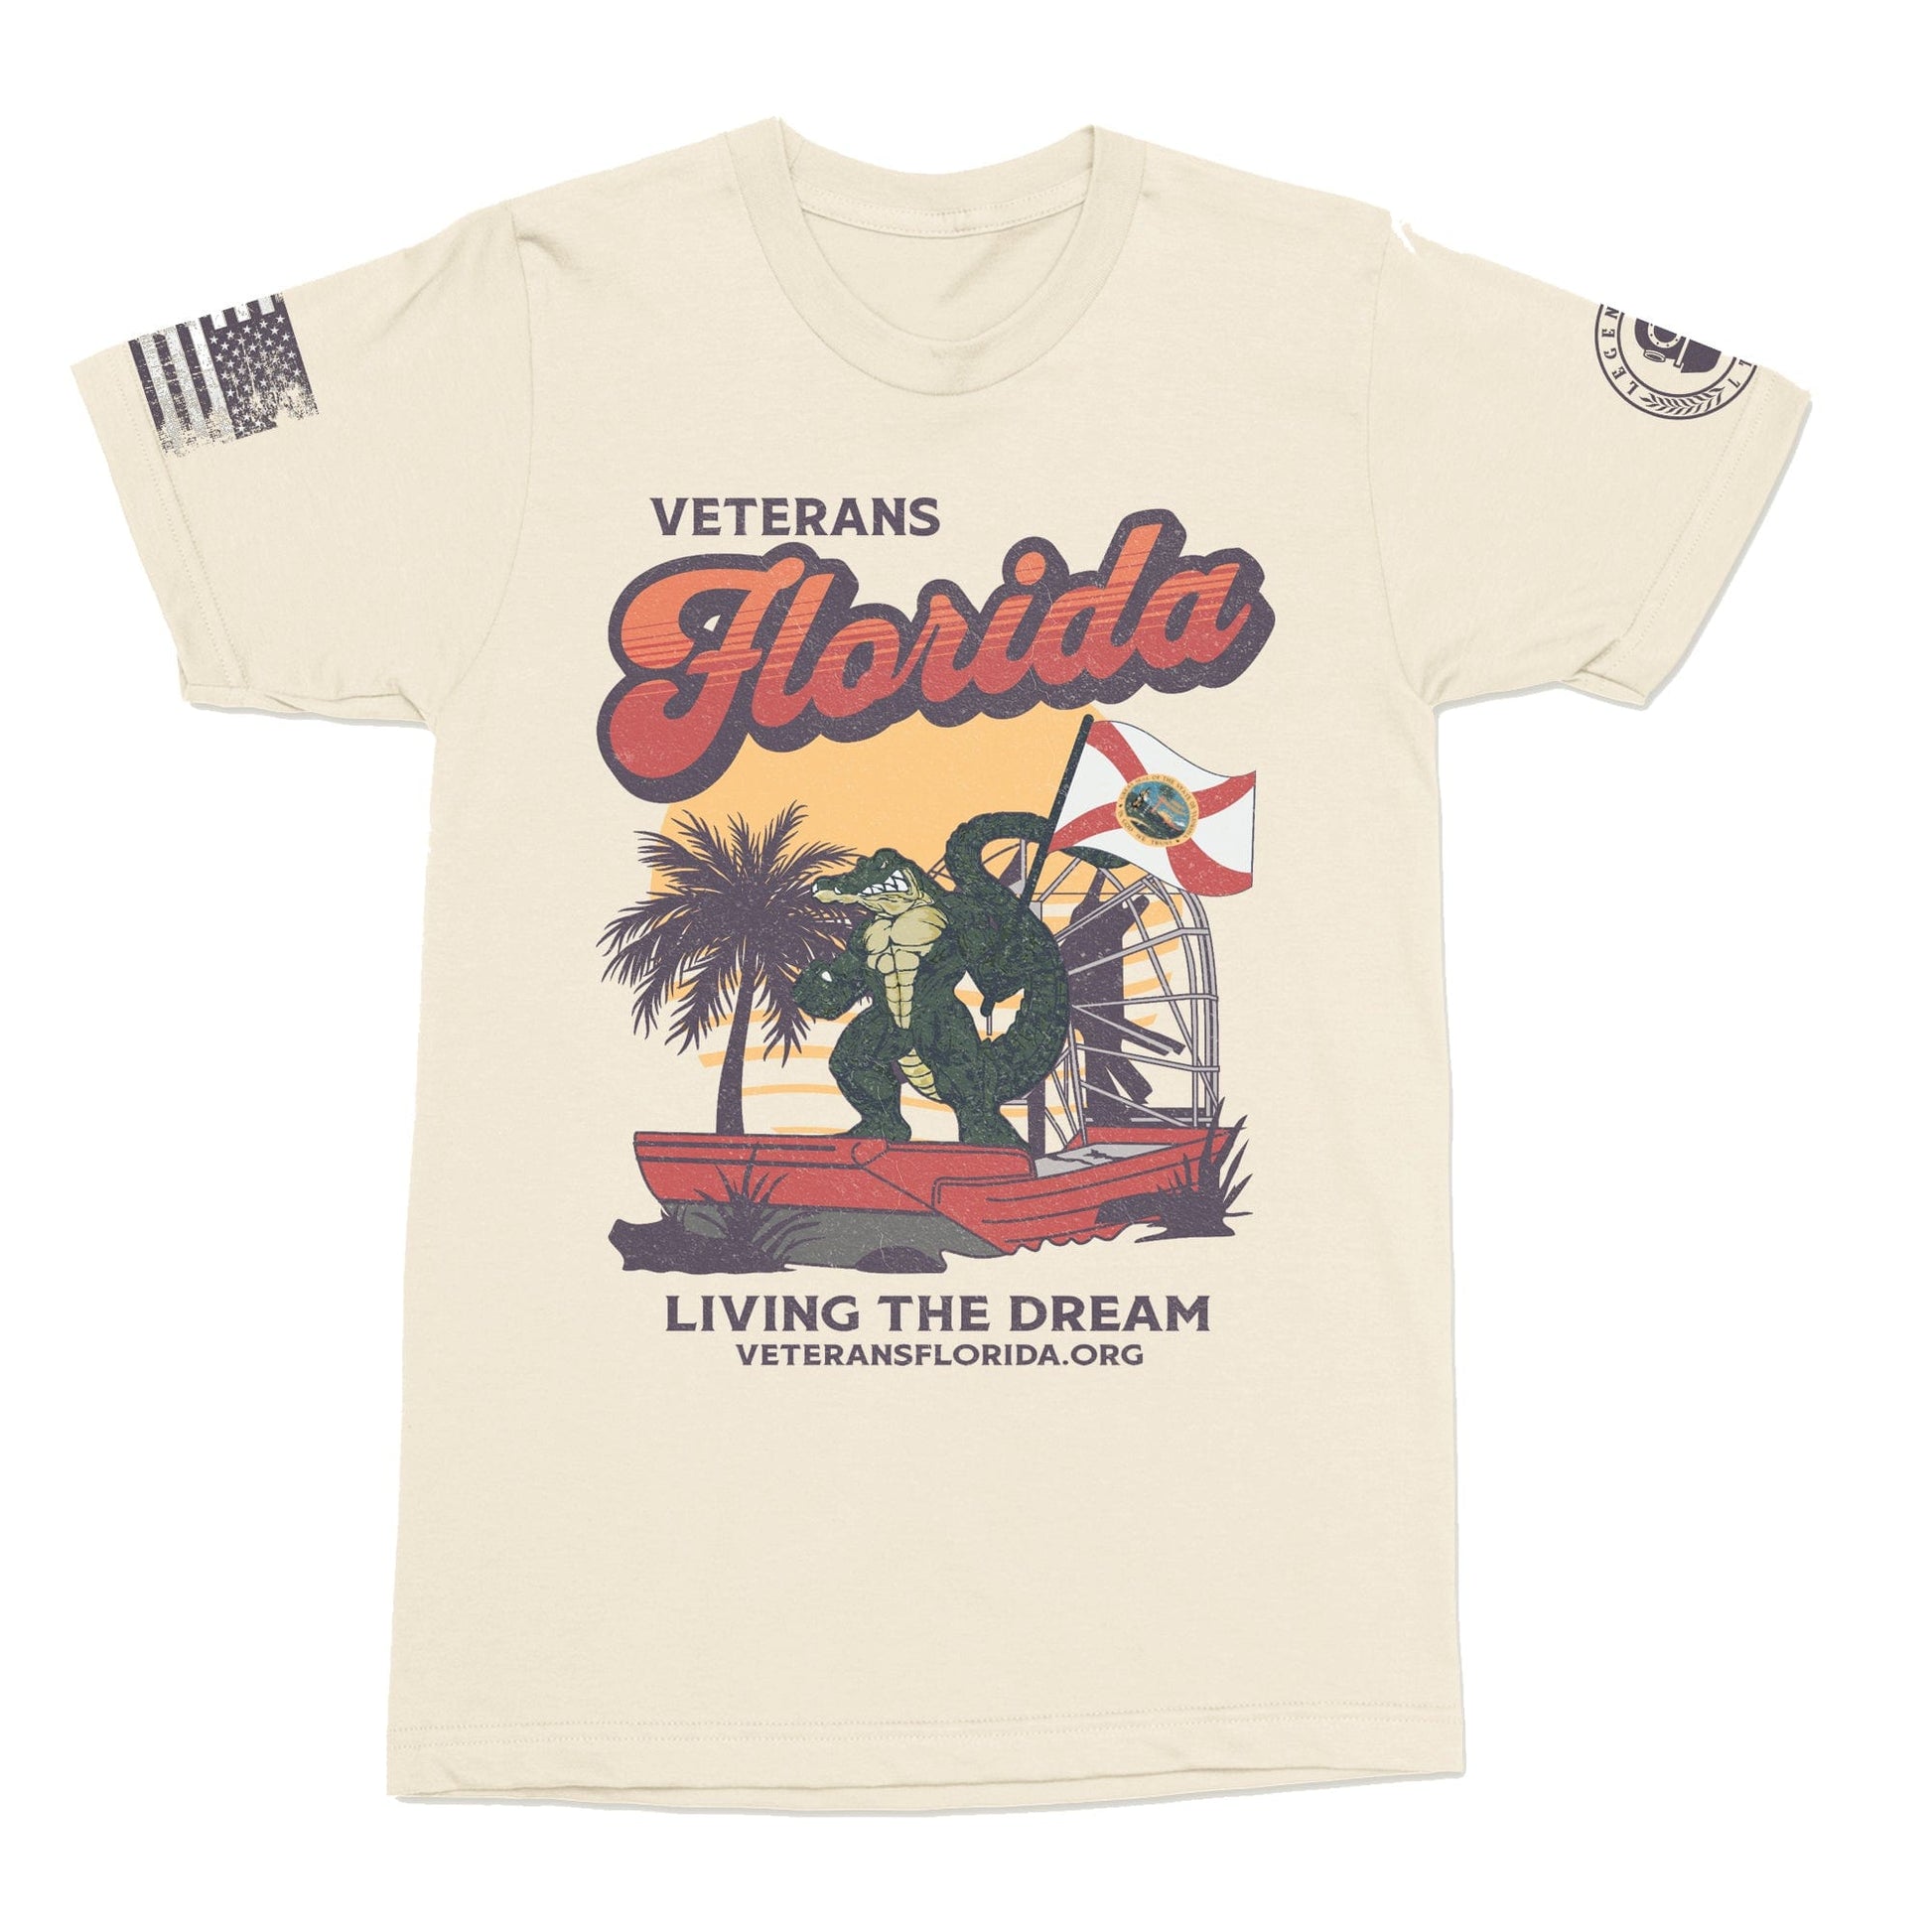 Legendary ltd. T SHIRT "Living the Dream" Florida Tee from Veterans Florida x Legendary LTD